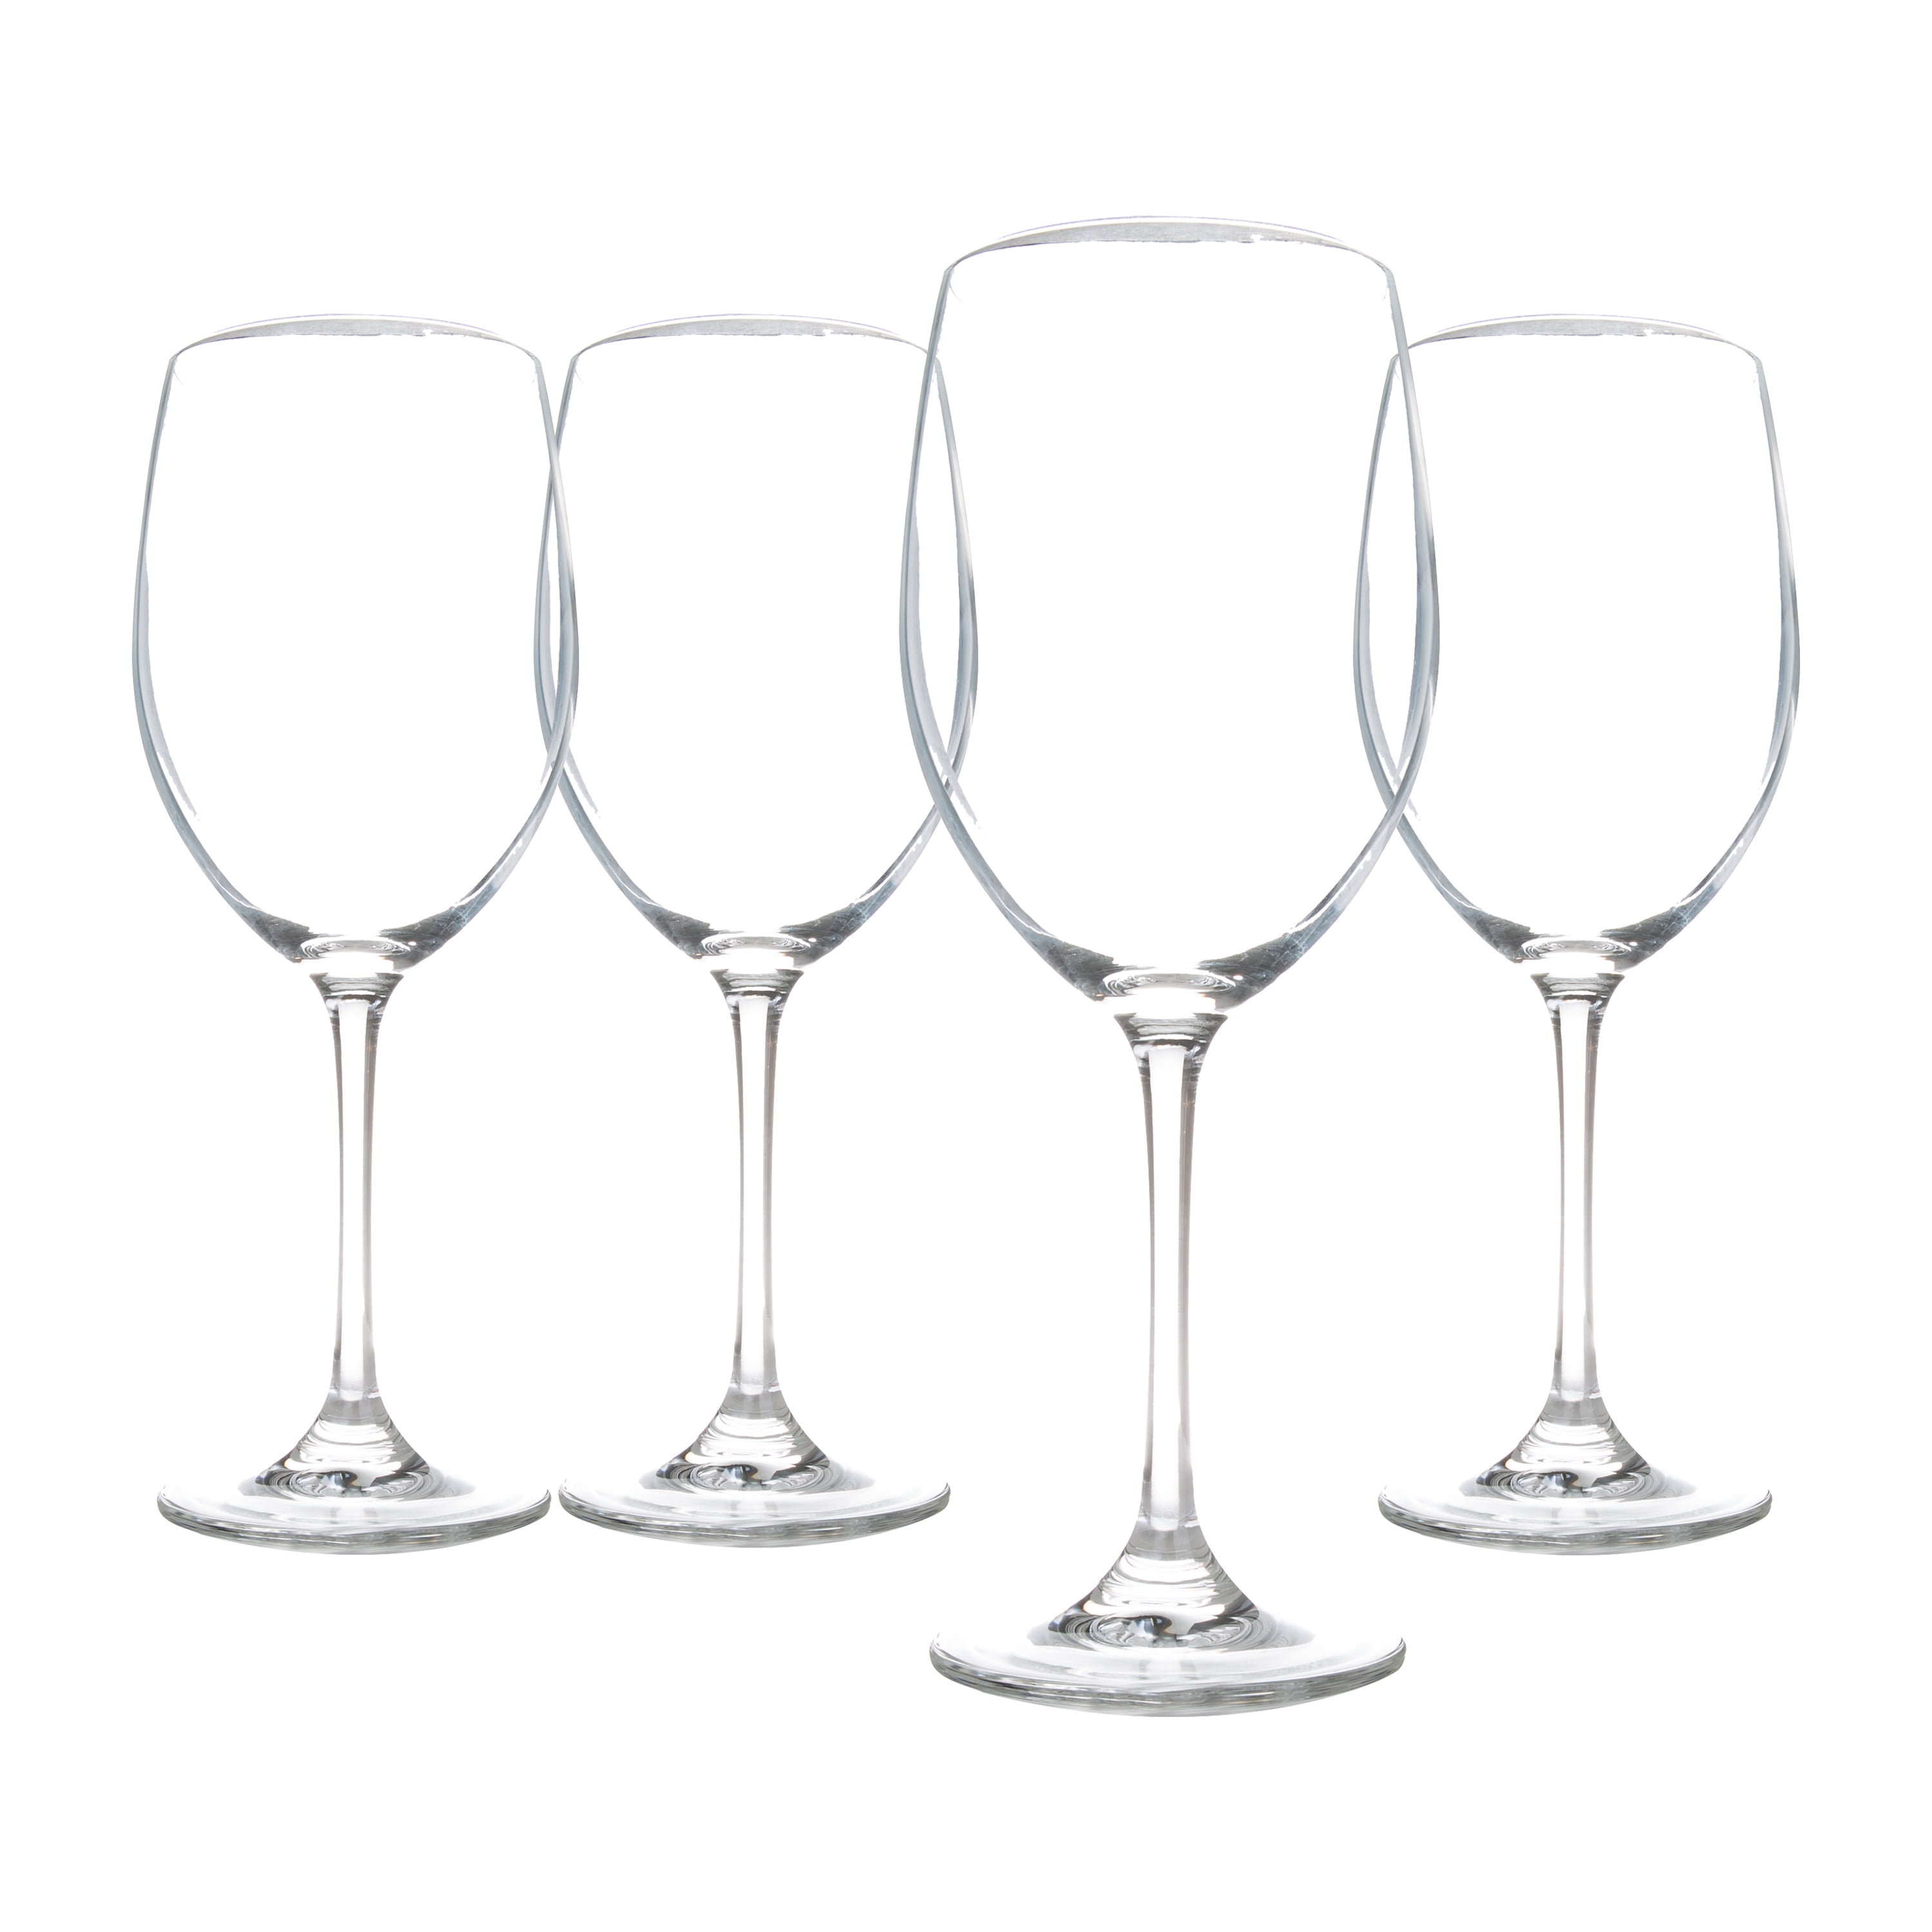 Burns Glass Clear Wine Glass 4pcs Set, 10 Oz Red